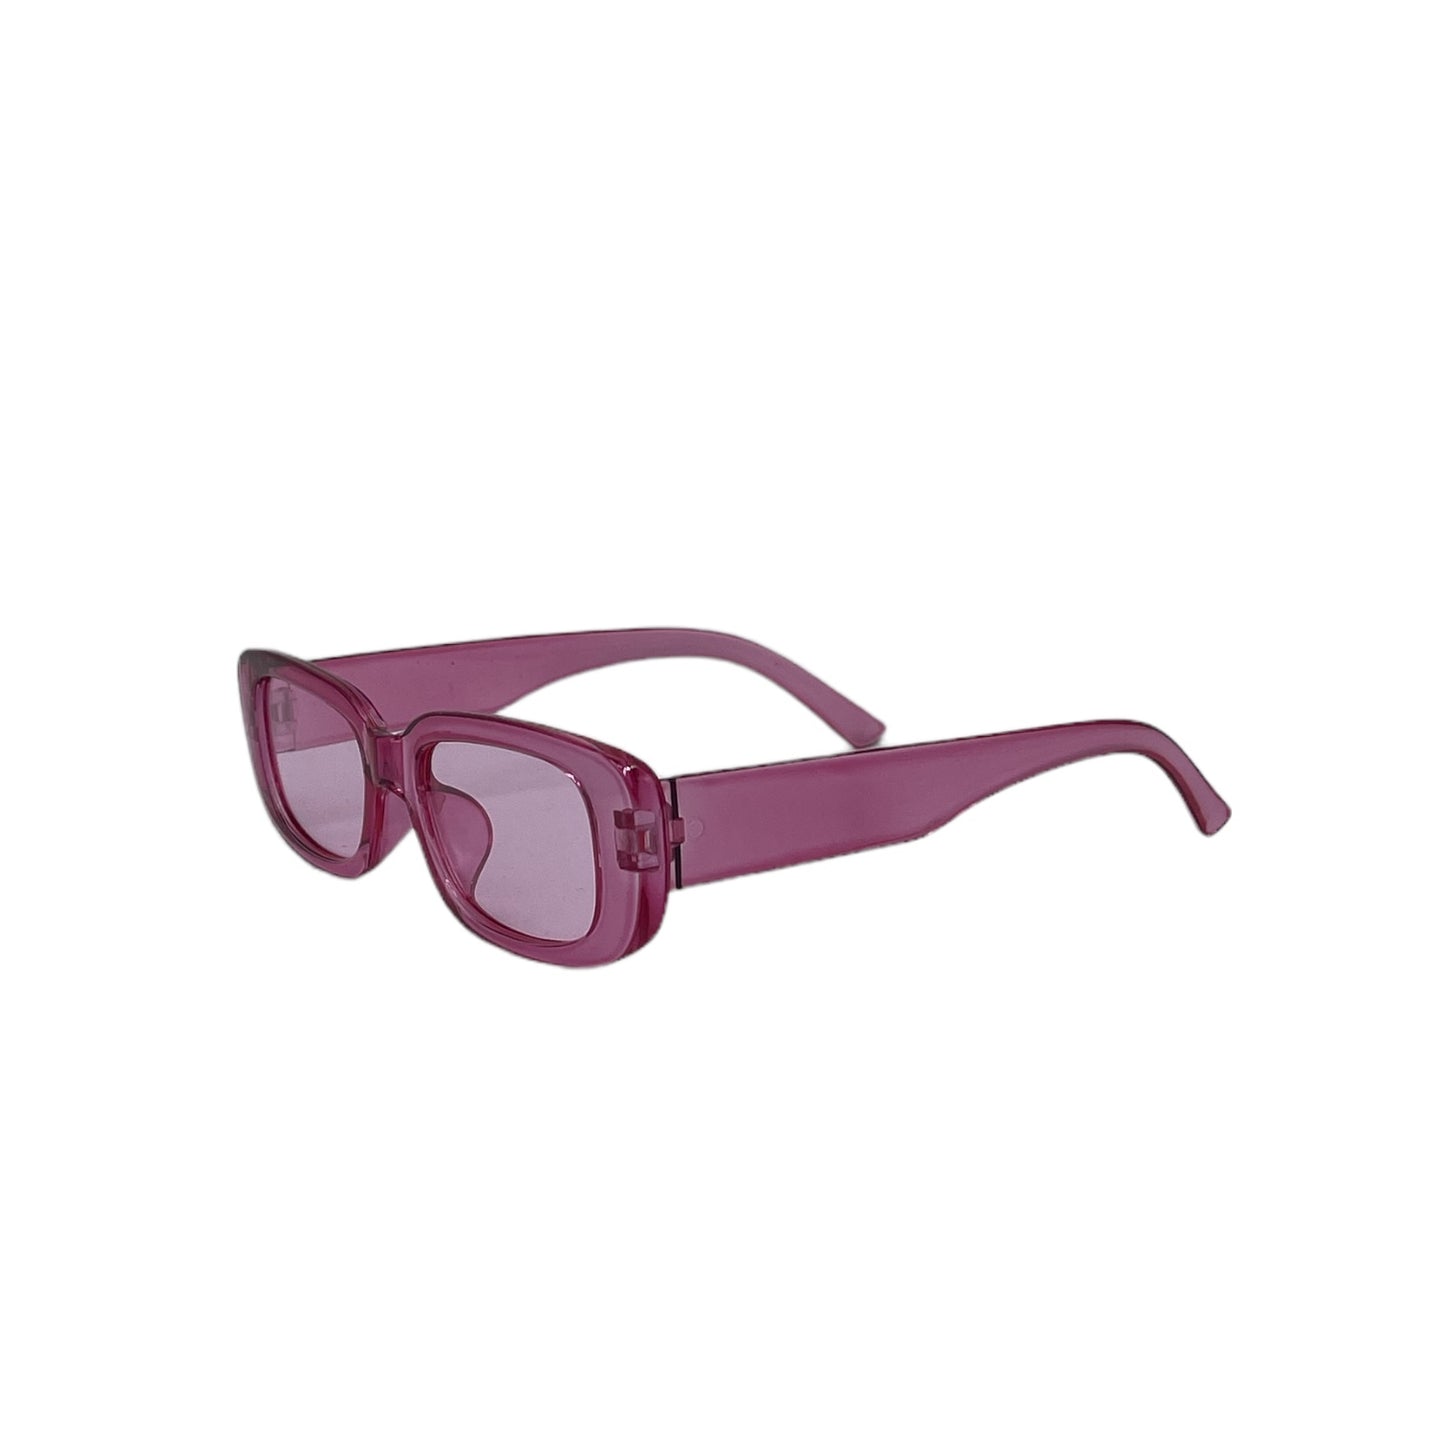 Oval Frame Everyday Sunglasses